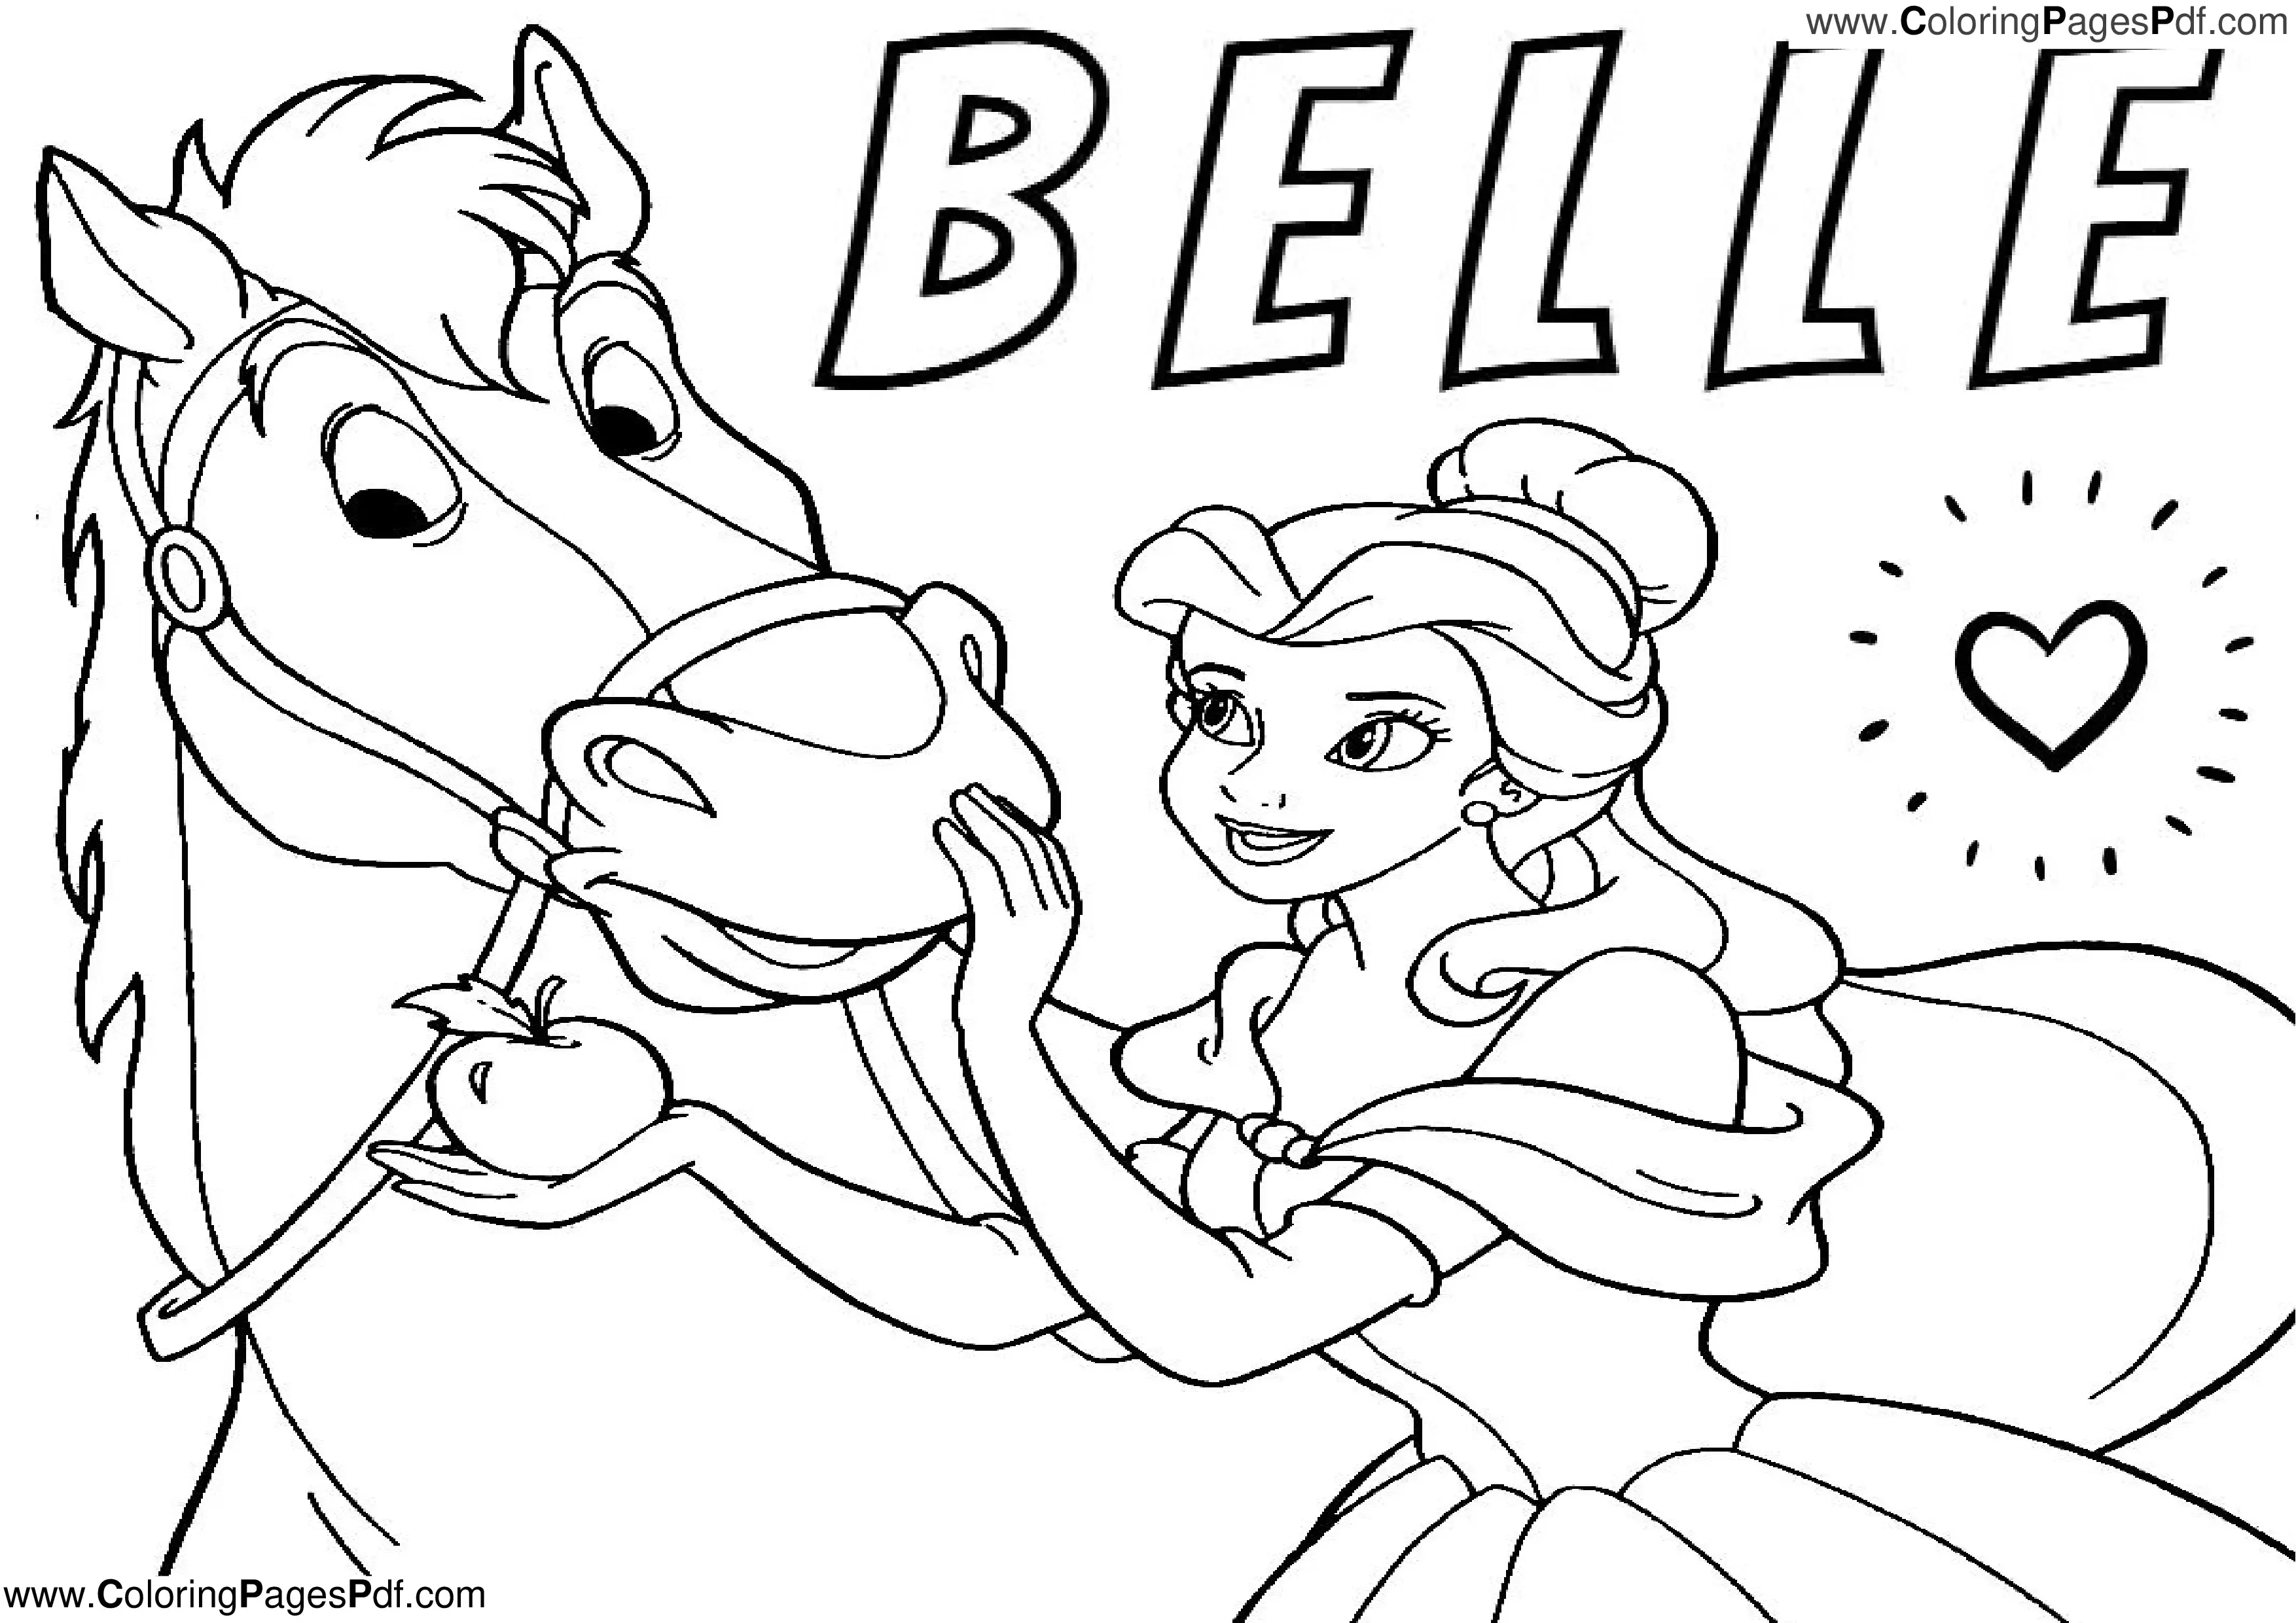 Belle coloring pages pdf